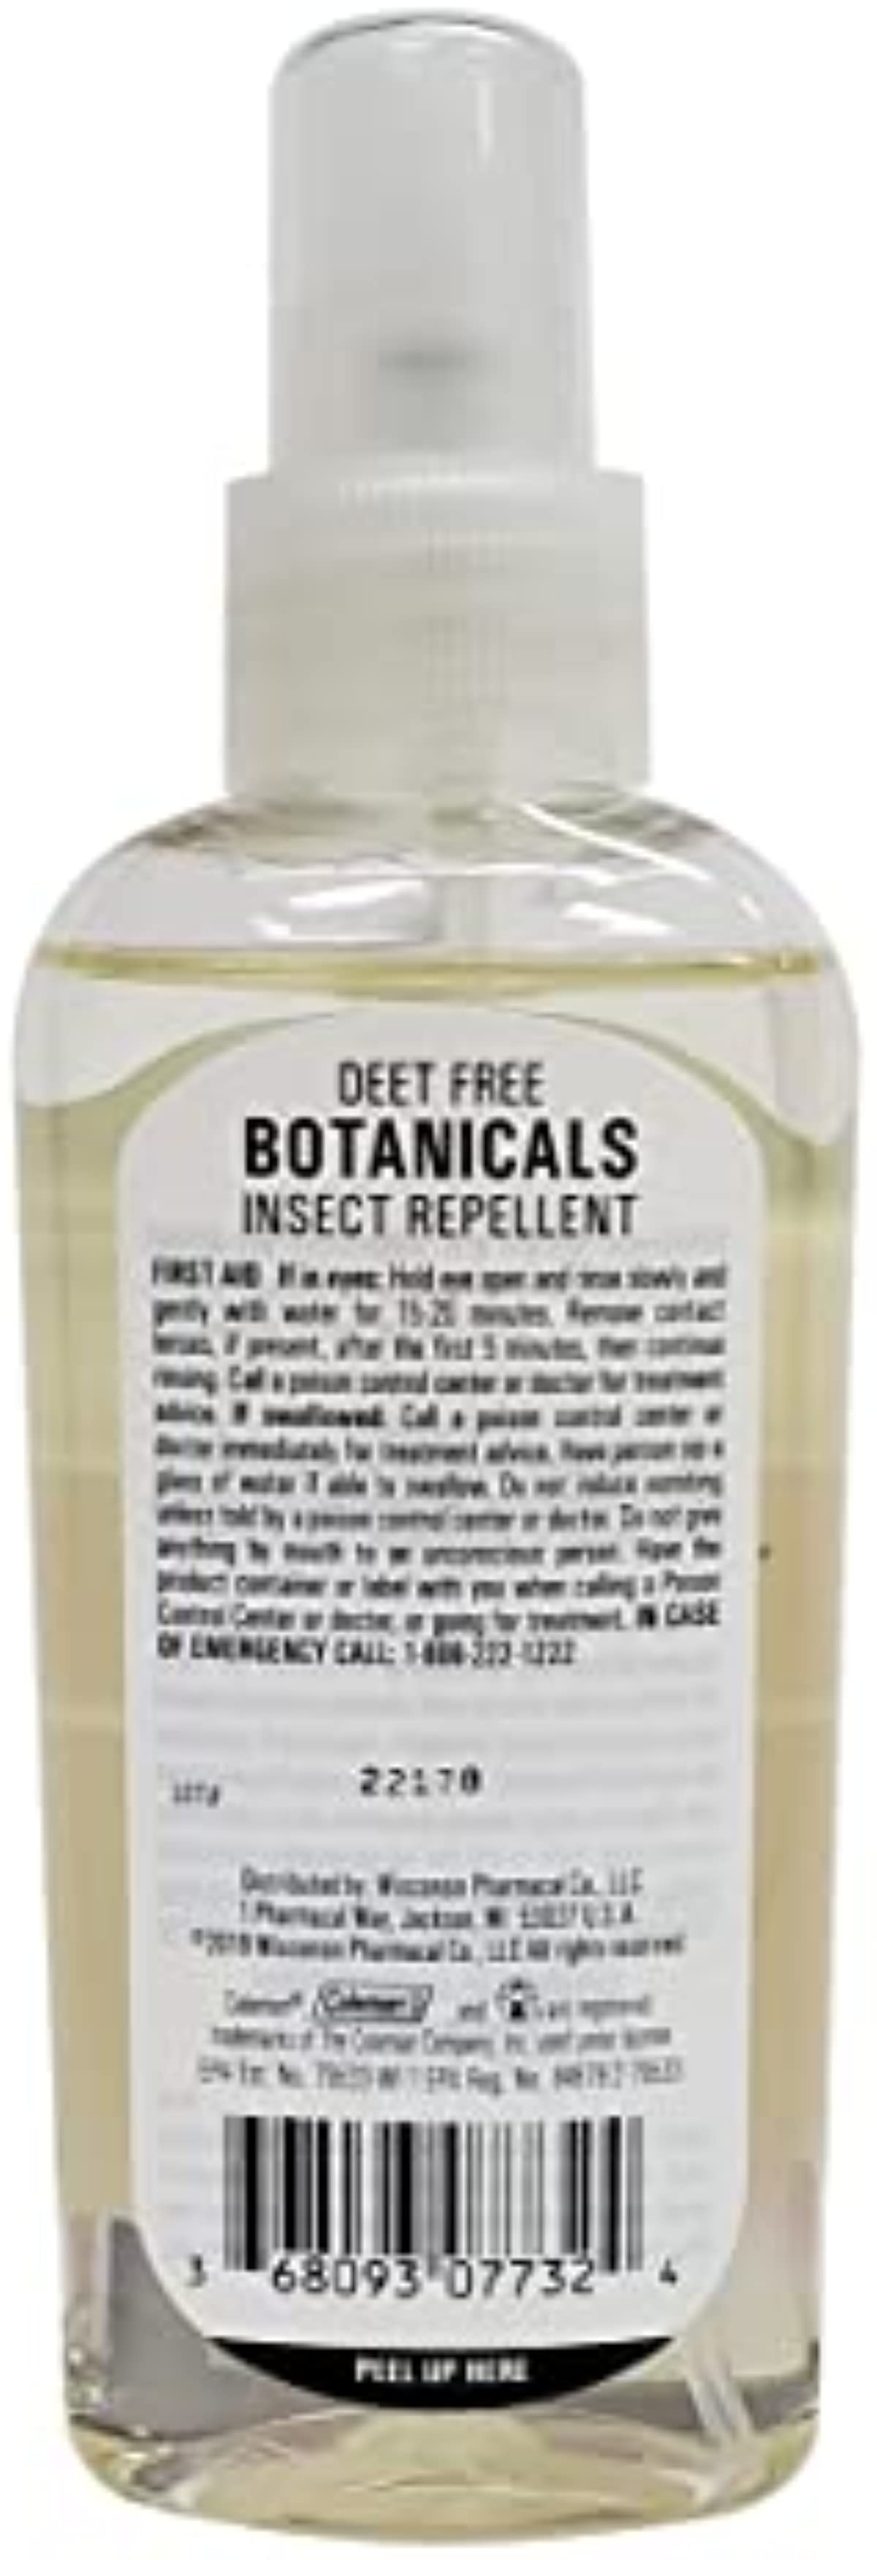 Coleman Naturally Based DEET Free Lemon Eucalyptus Insect Repellent | Pump Spray | 4 fl oz